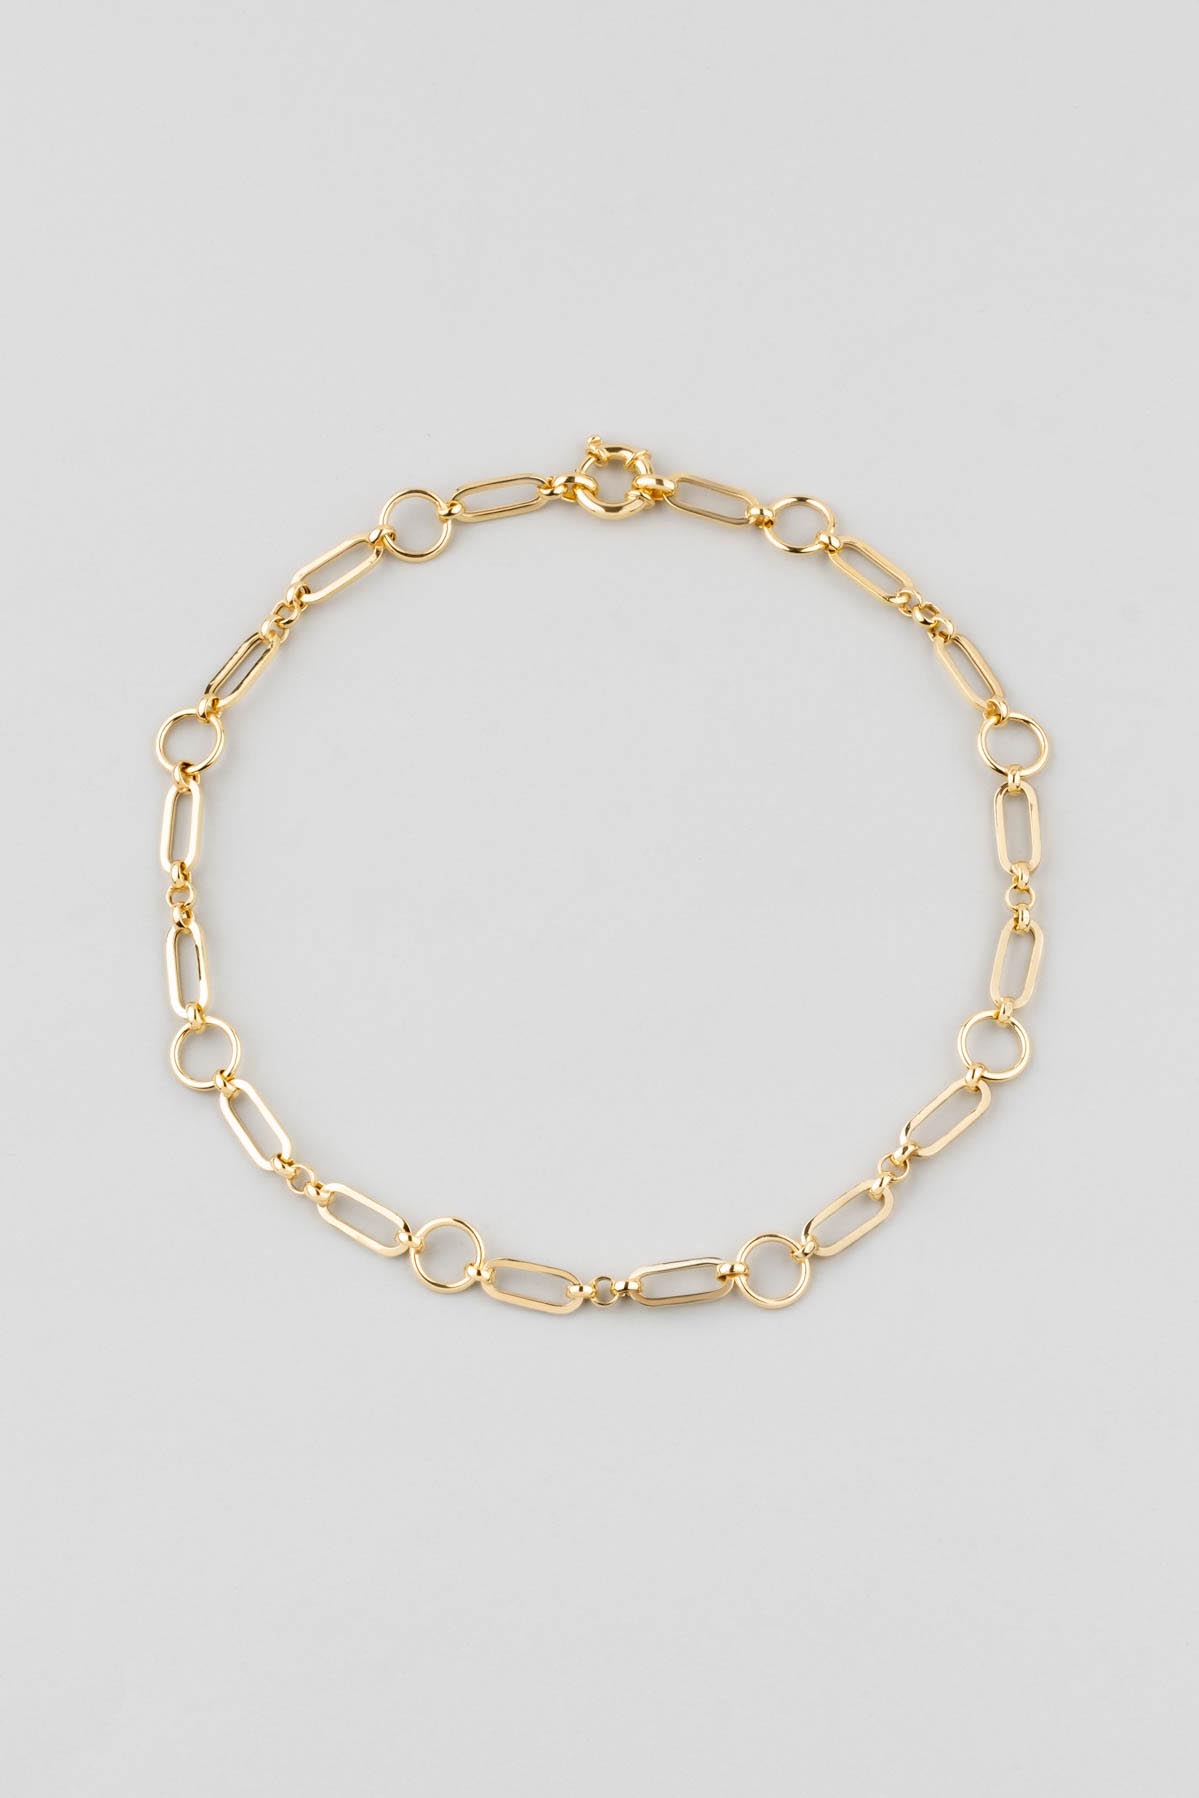 Modern Design 18 Karat Yellow Gold Plated 45 Cm Silver Chain Necklace